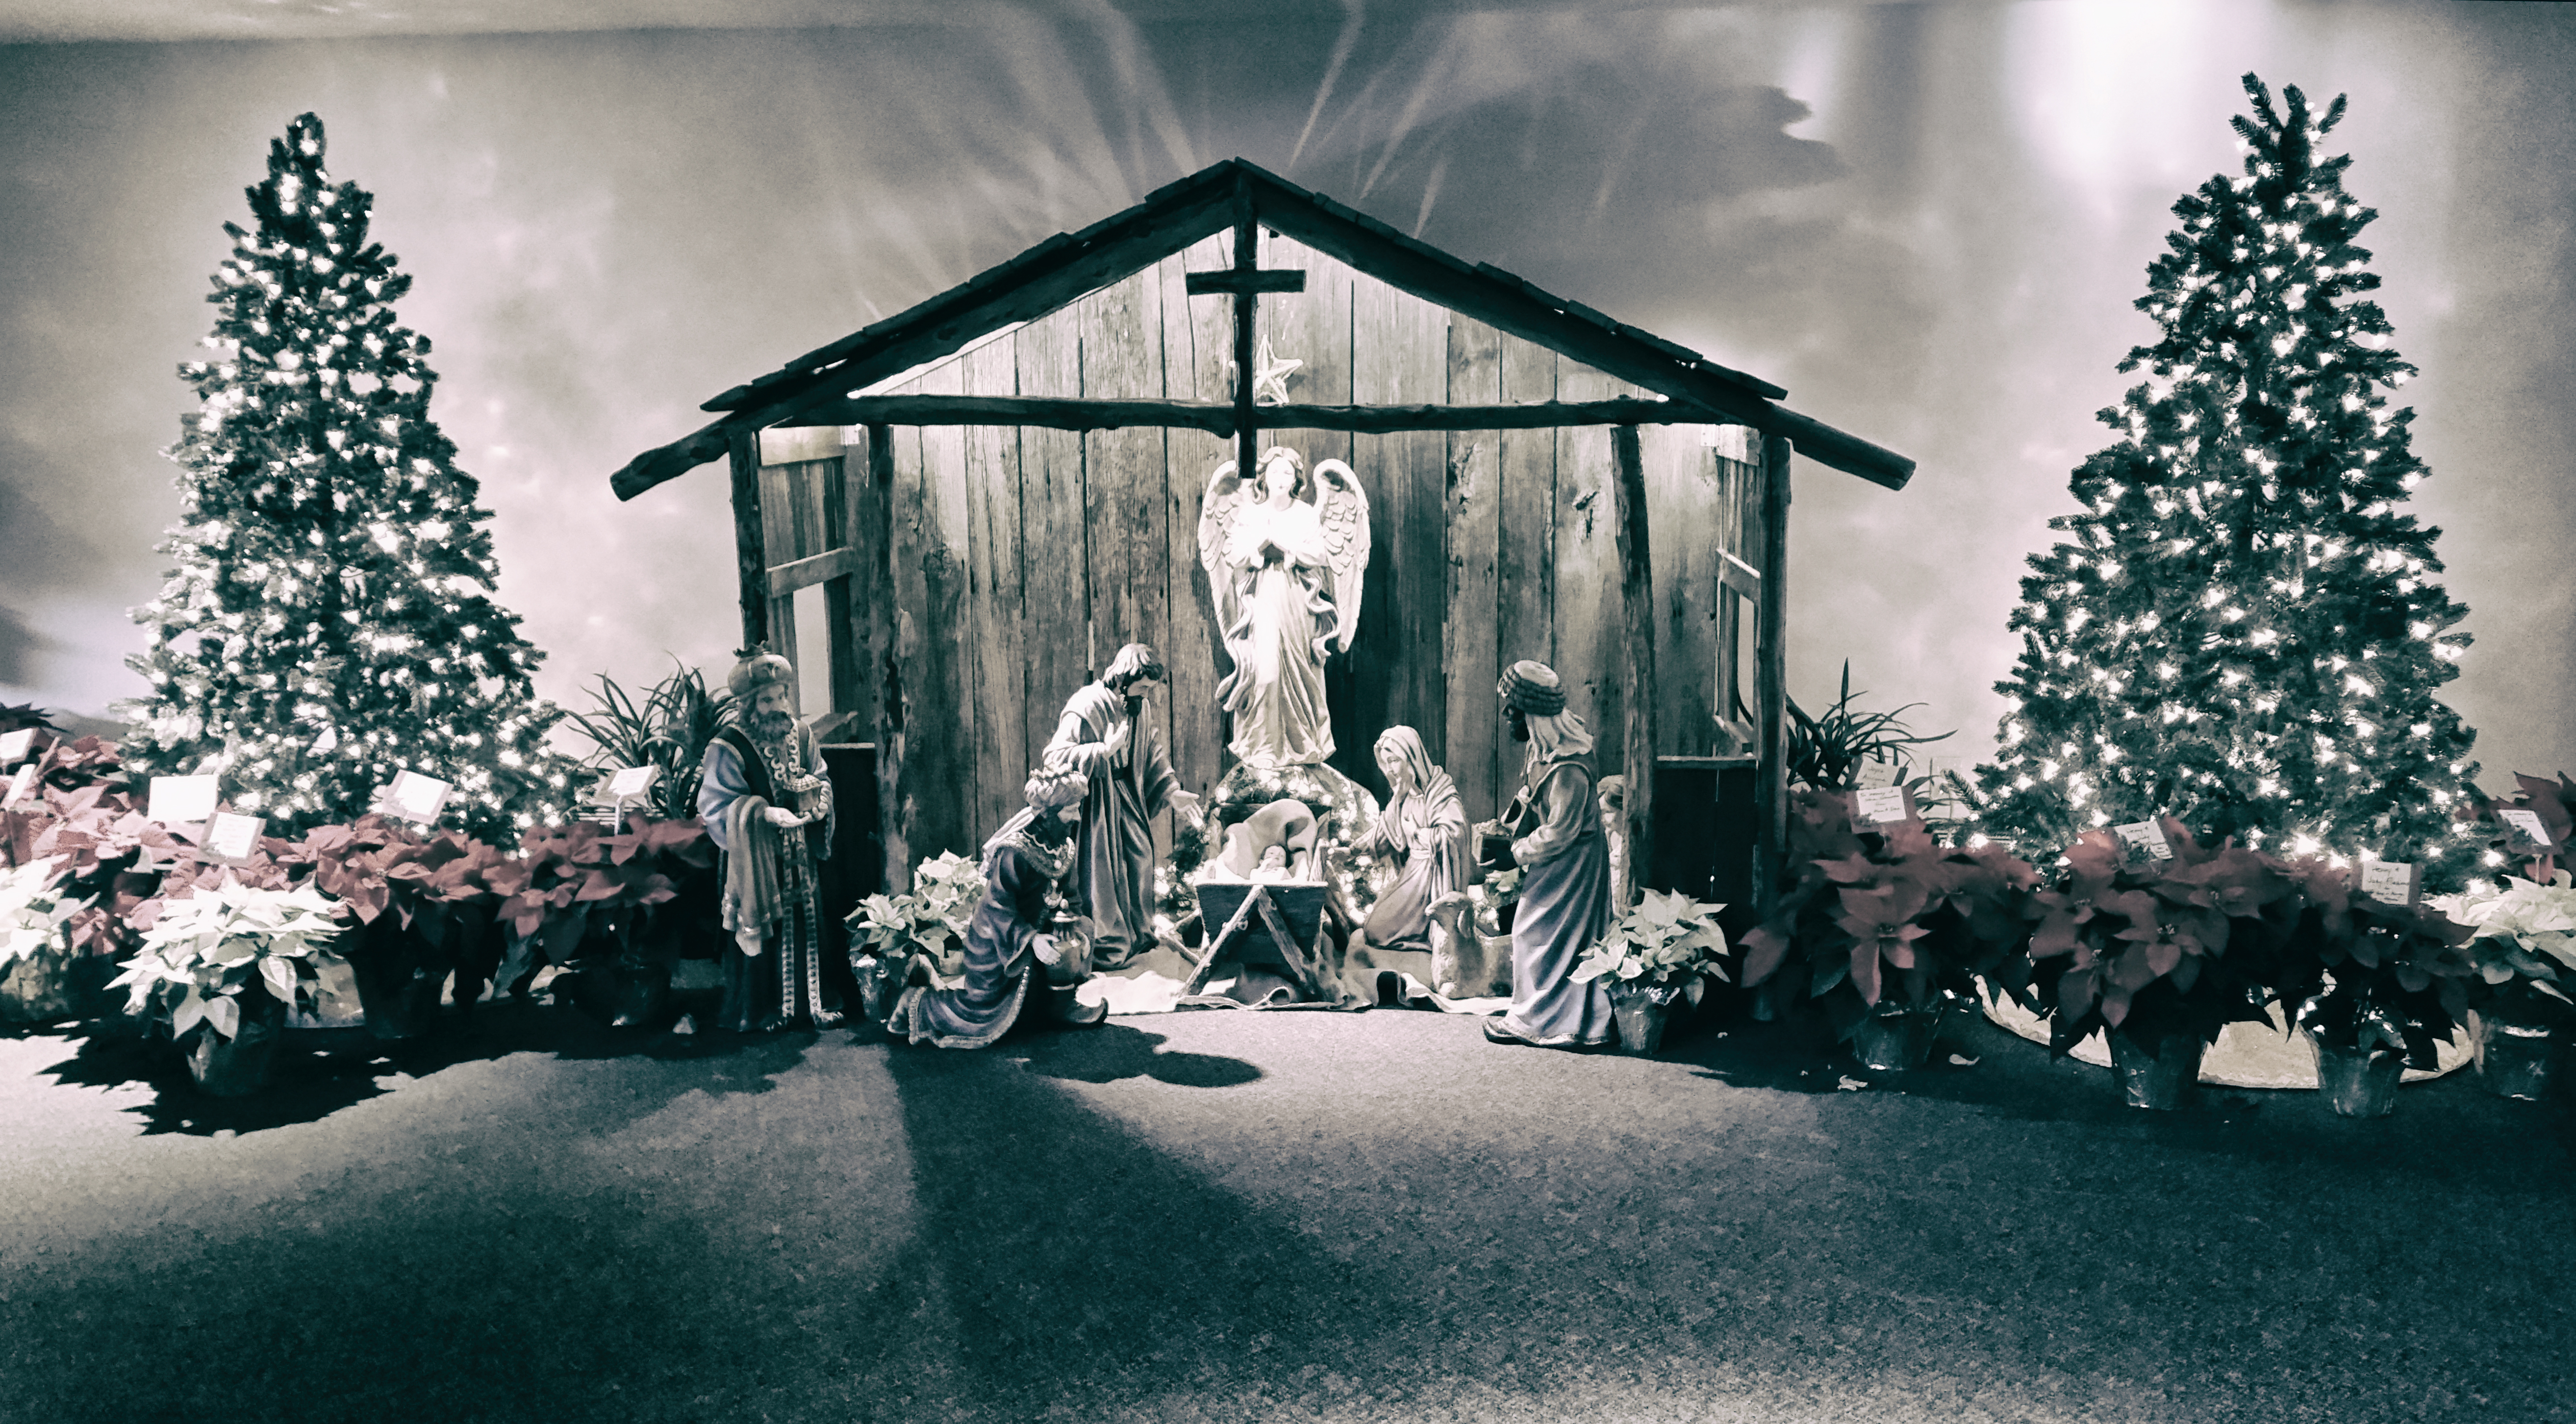 Pictorialism Image - Nativity Scene